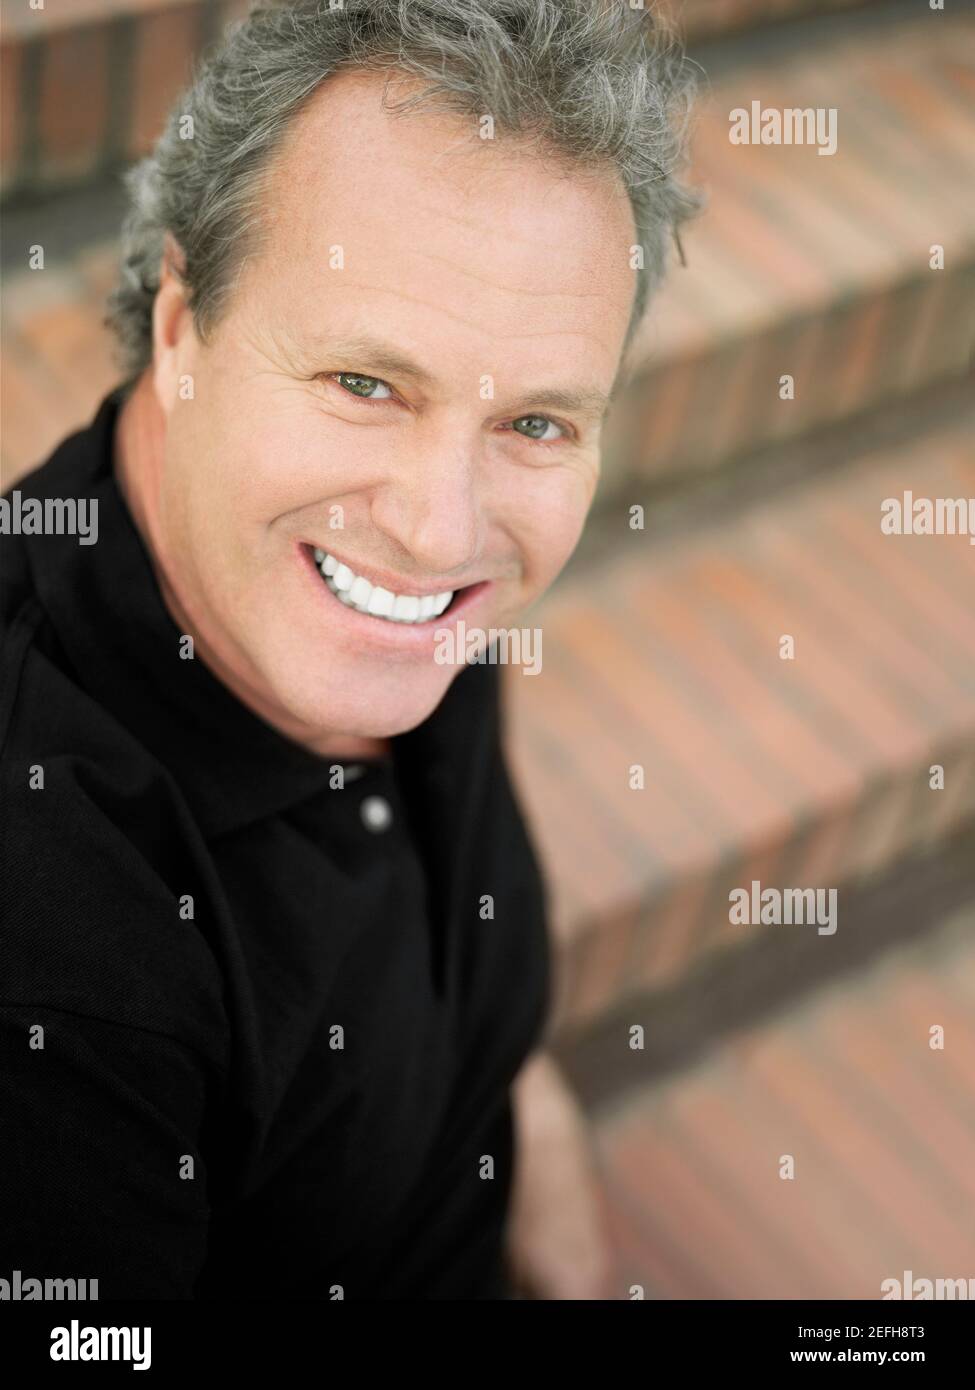 Portrait of a mature man smiling Stock Photo